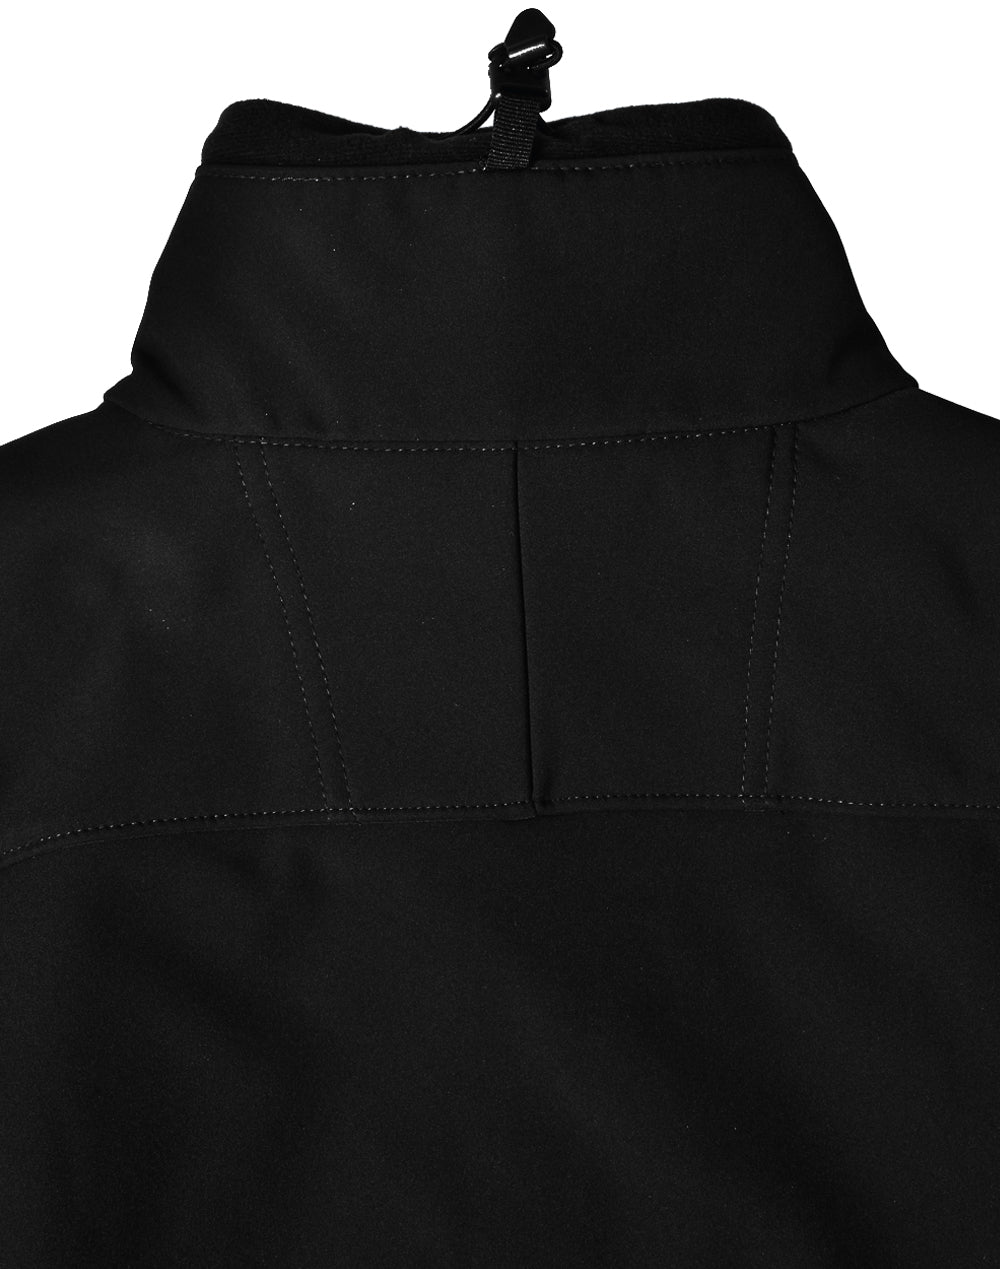 JK23 Men's Softshell High-Tech Jacket